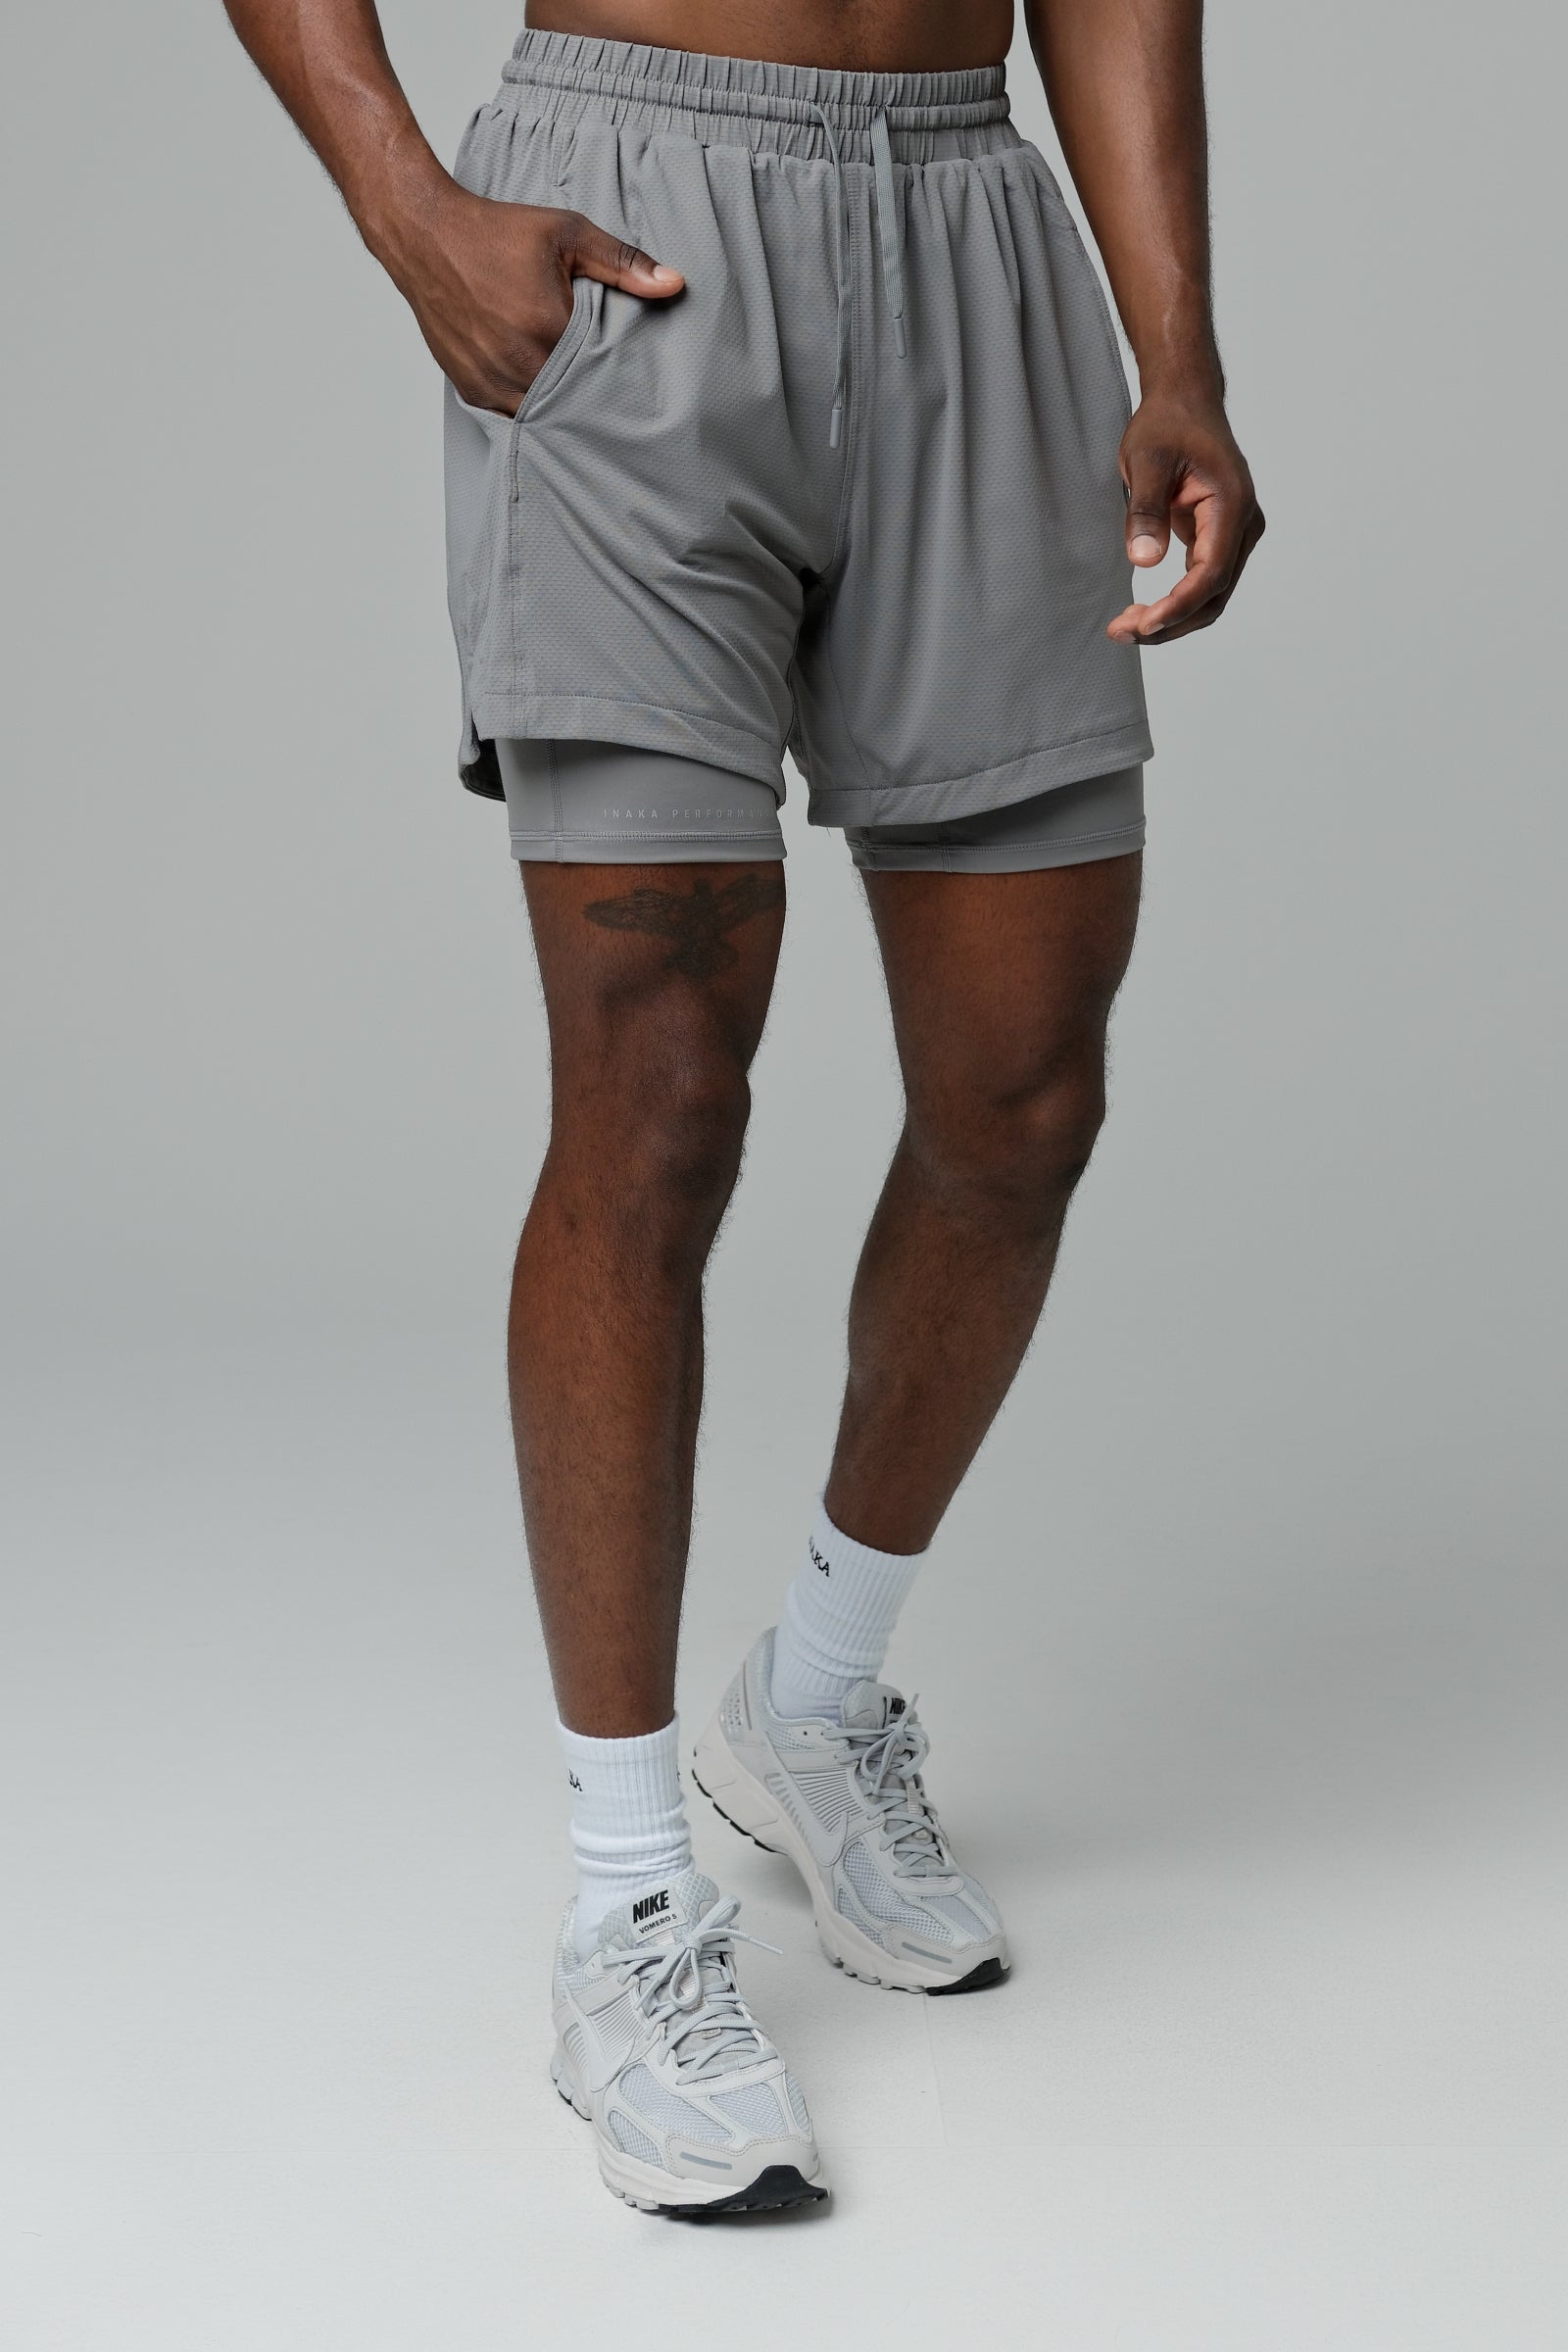 CoreLite Shorts Lined - Steel Grey